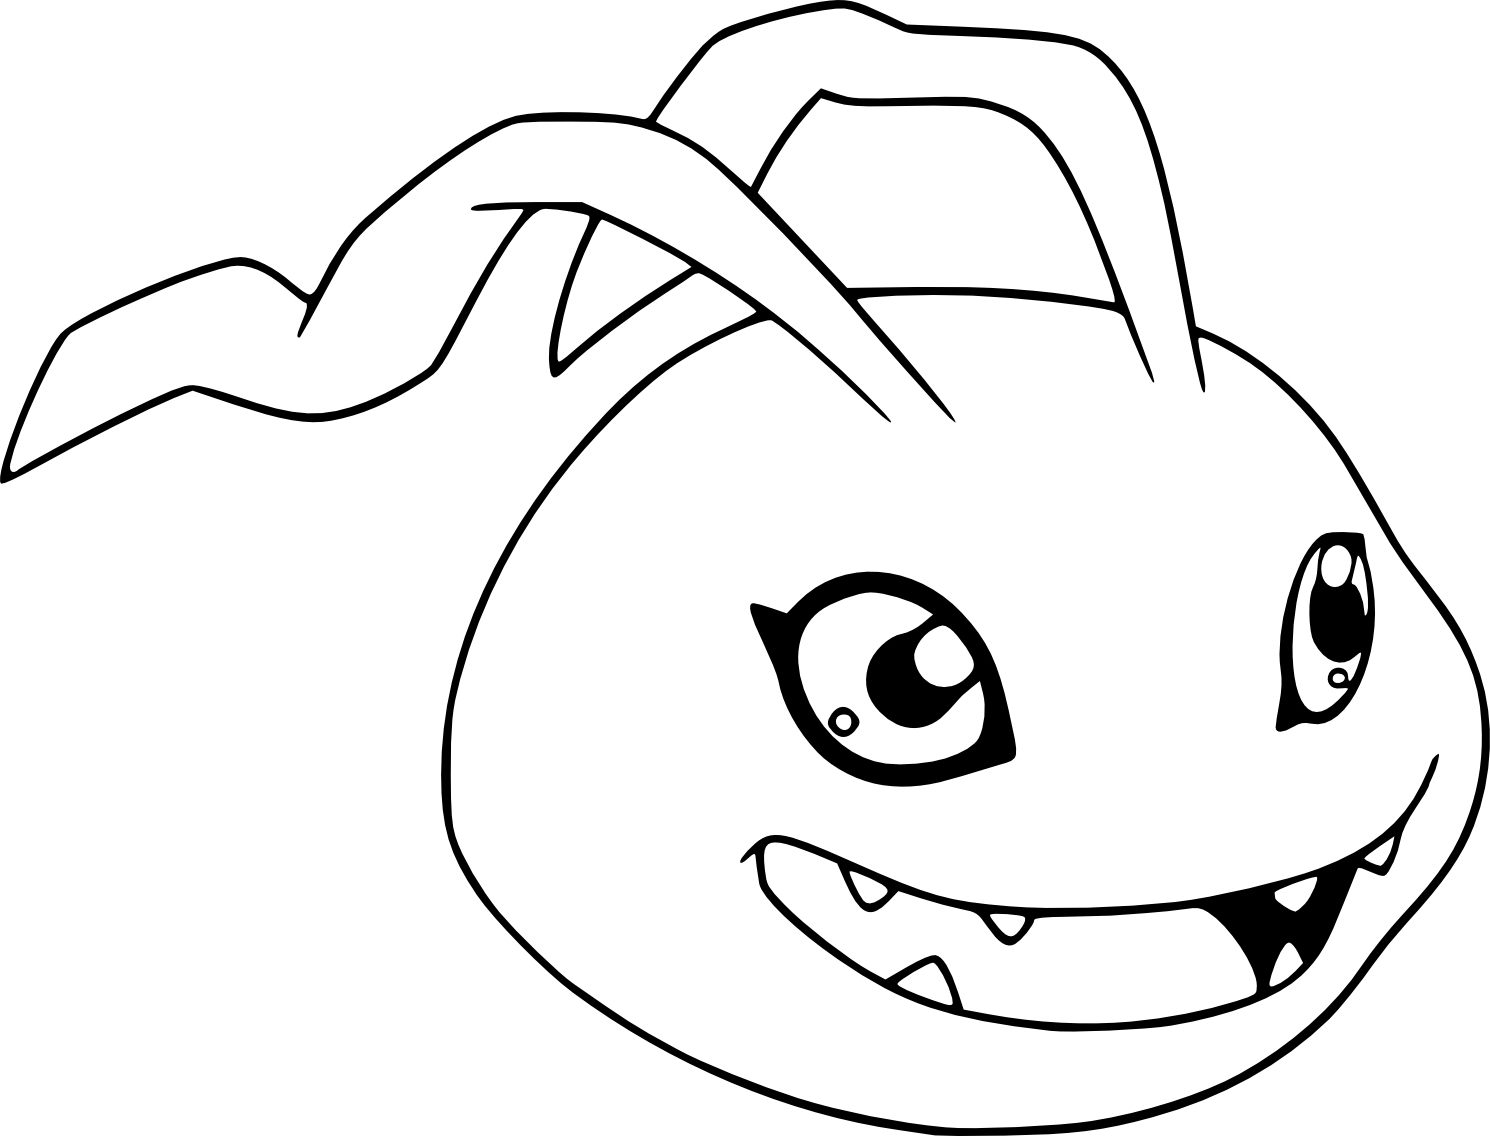 Koromon Digimon coloring page